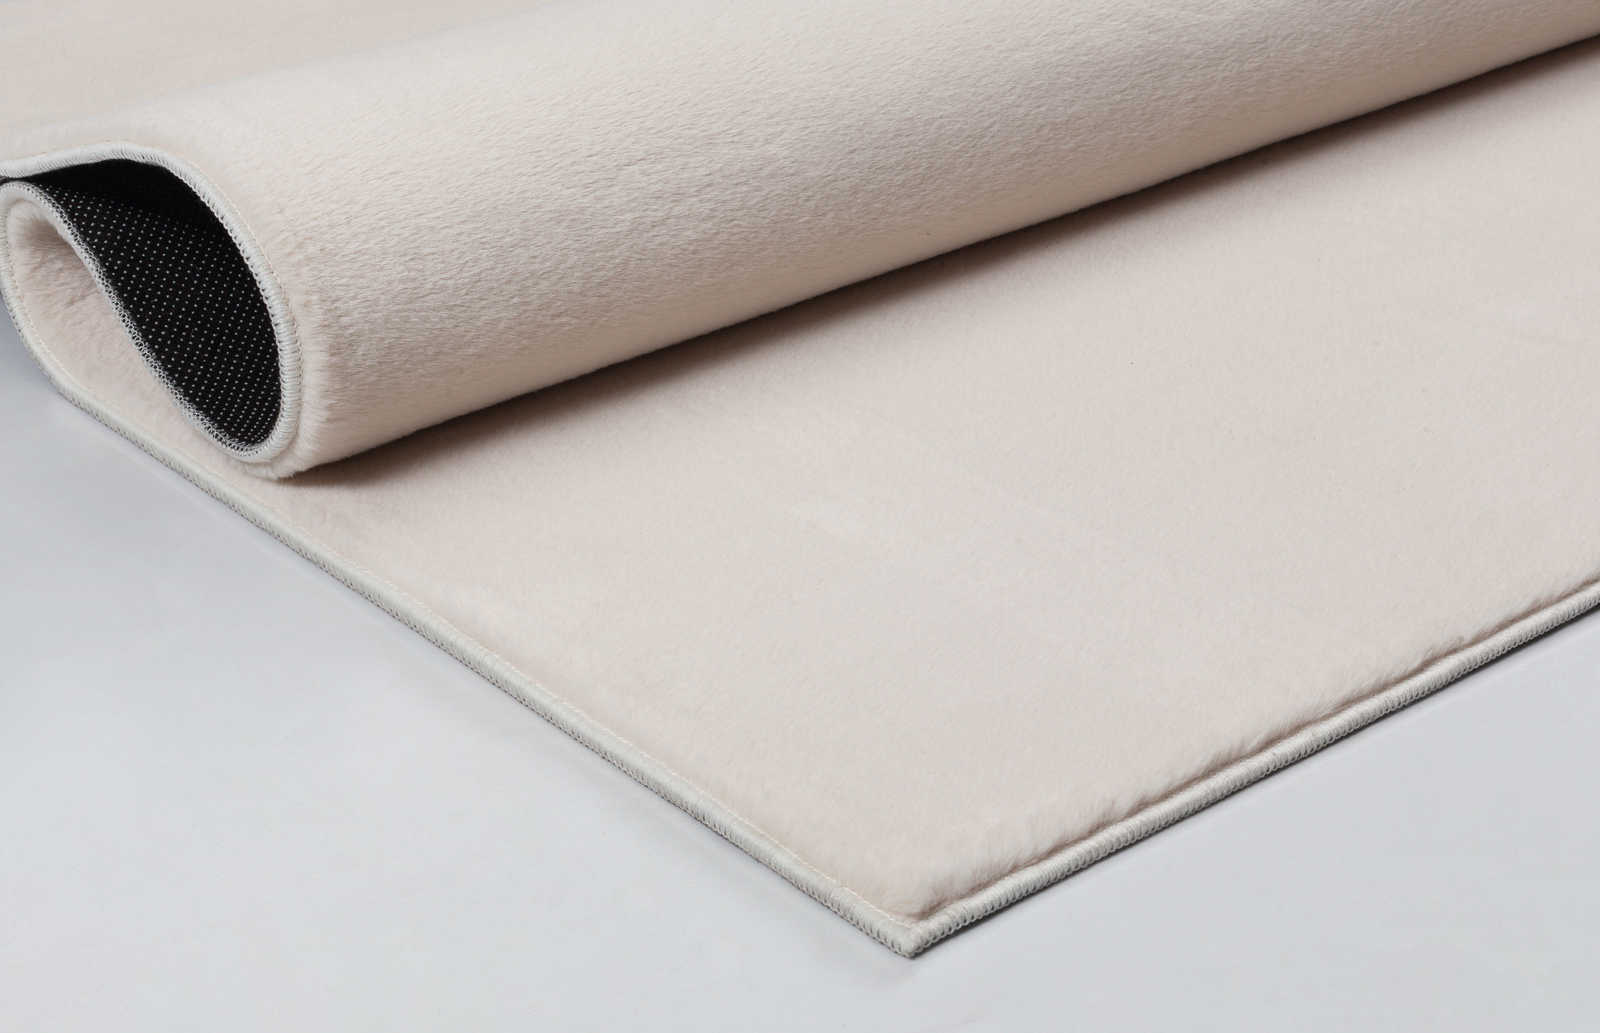             Plain high pile carpet in soft beige - 220 x 160 cm
        